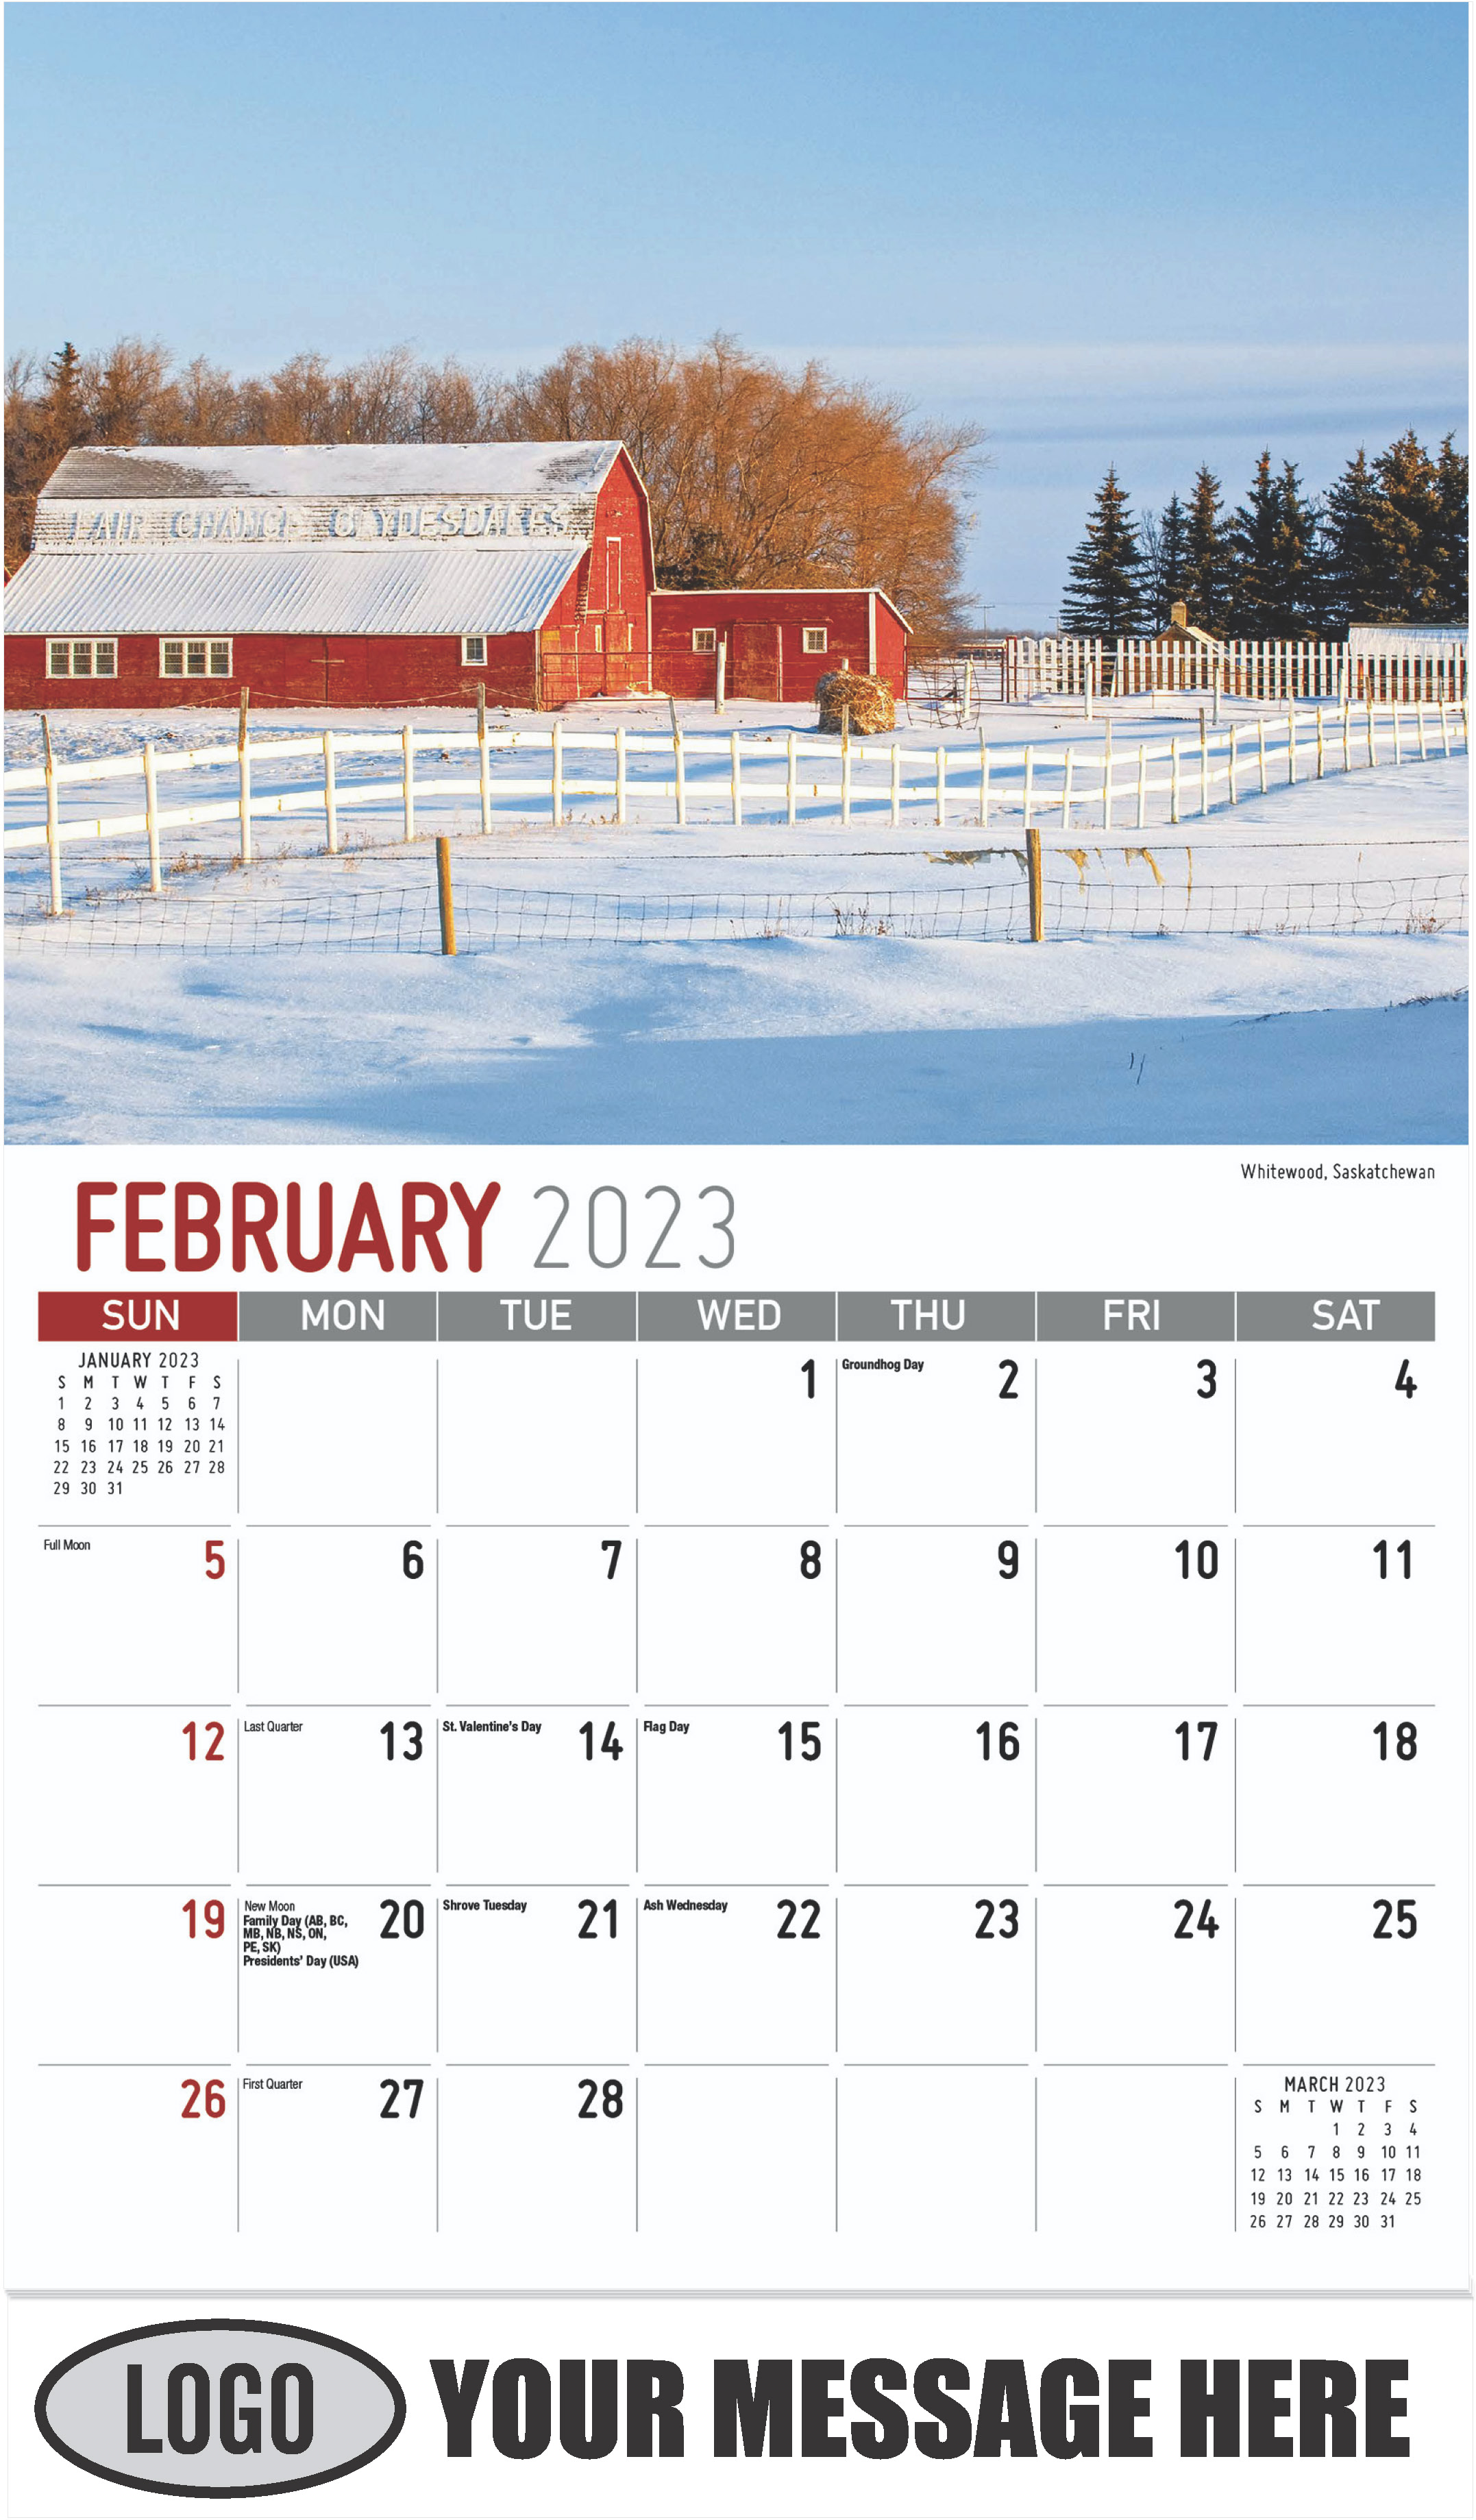 Whitewood, Saskatchewan - February - Scenes of Western Canada 2023 Promotional Calendar